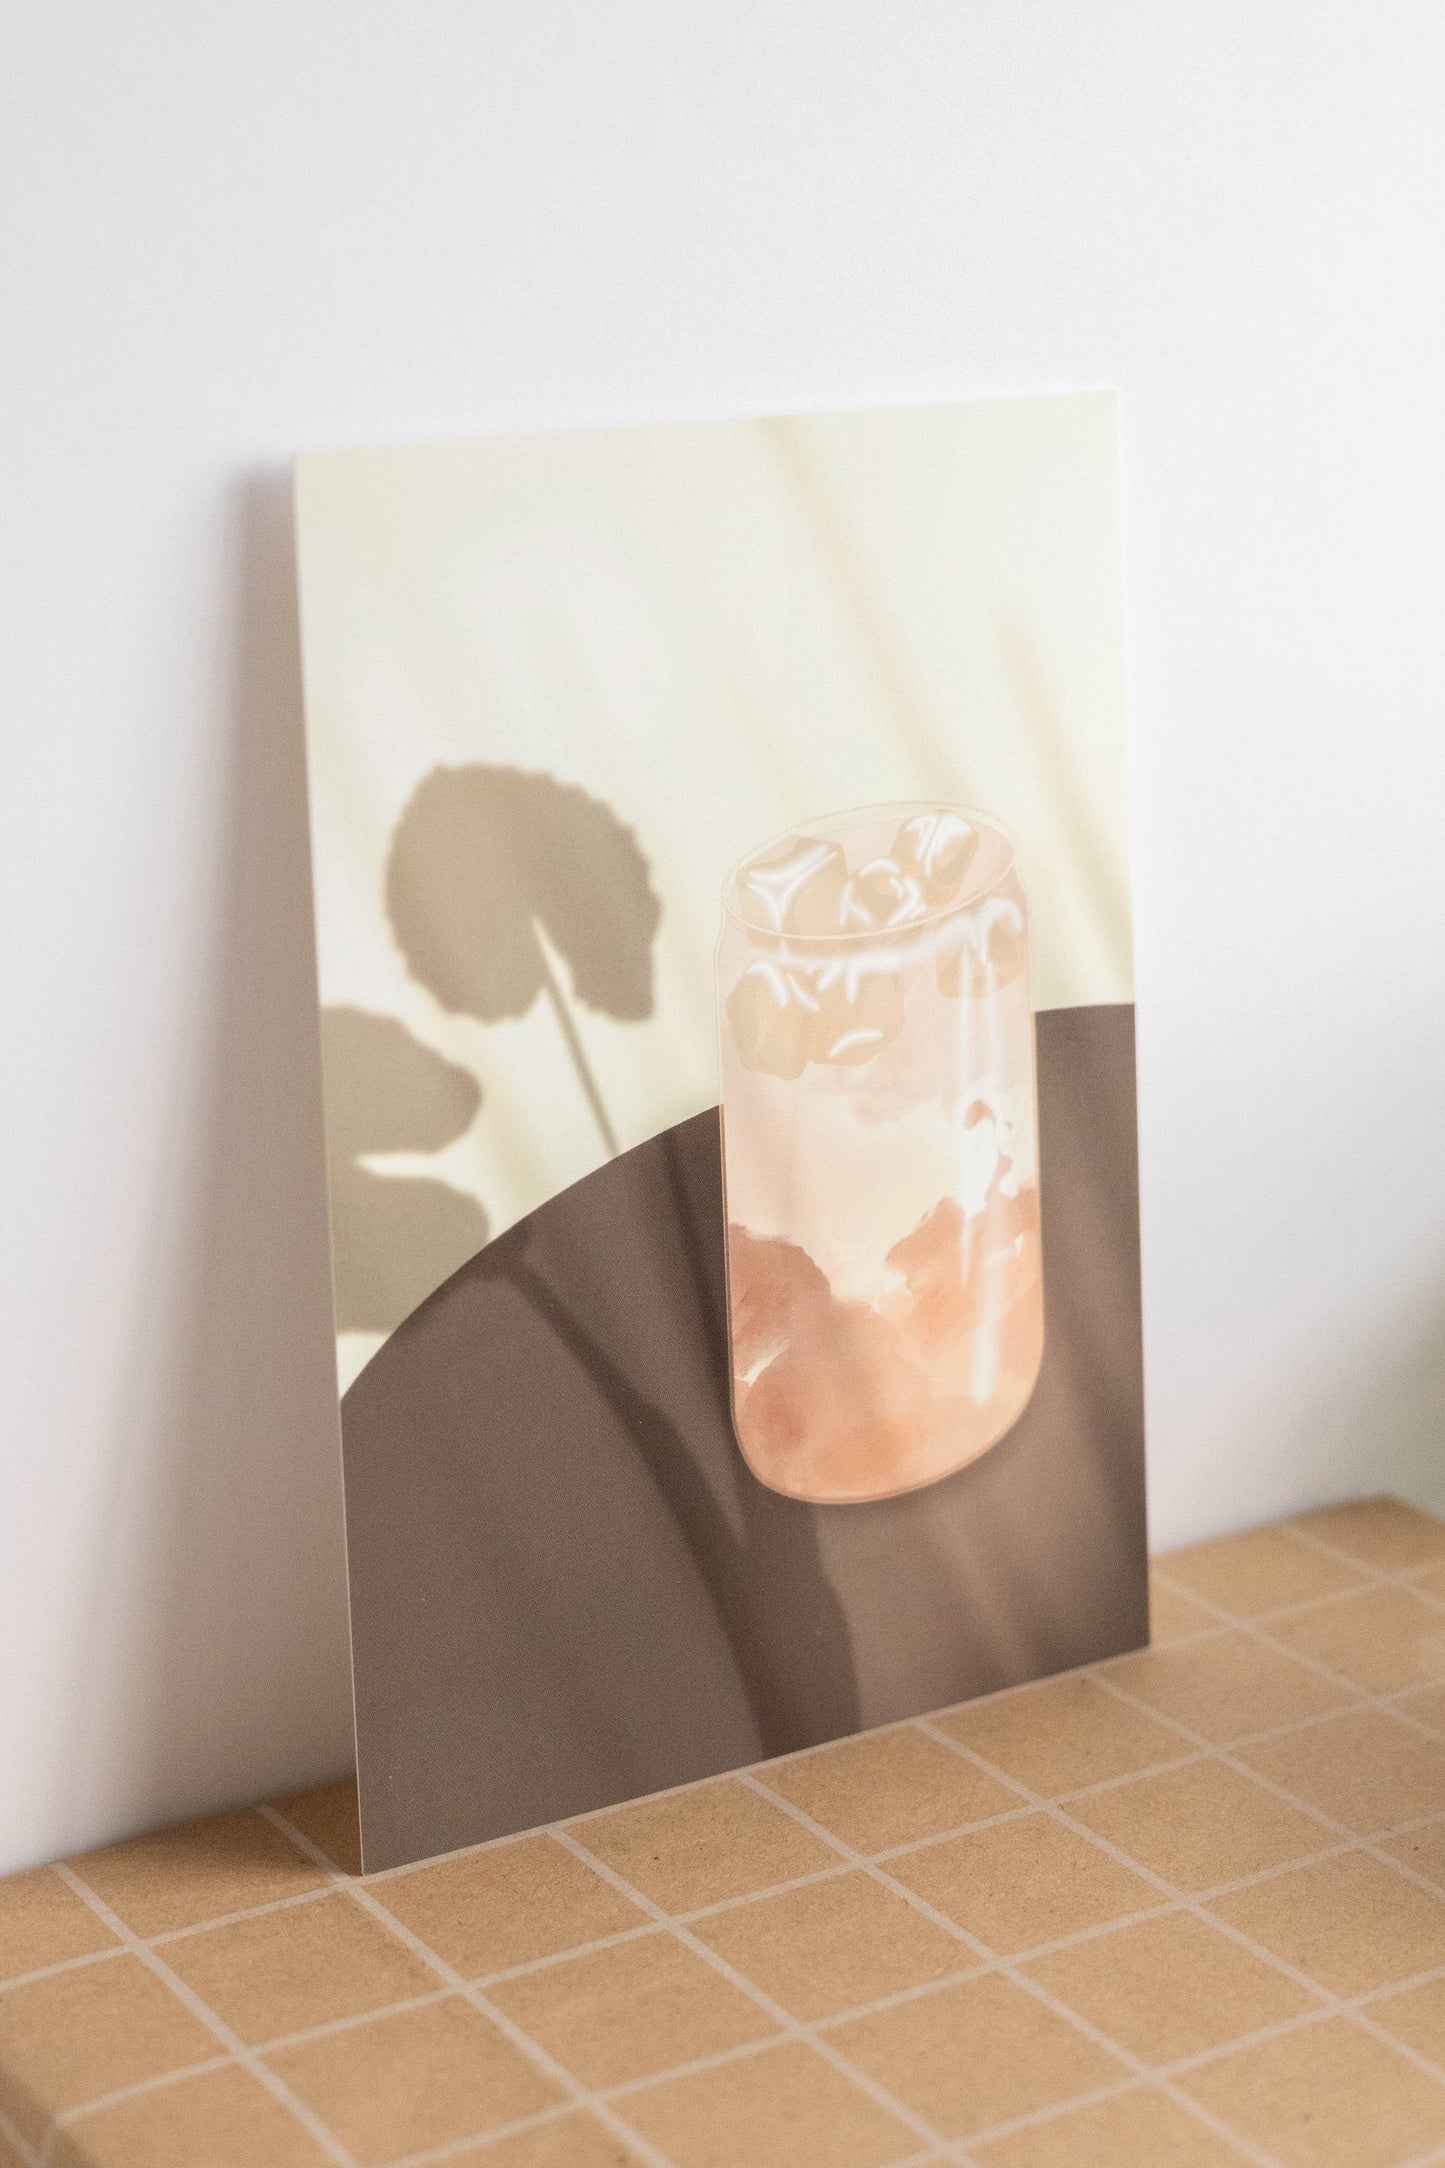 Crafti Boba Taro Drink Art Print